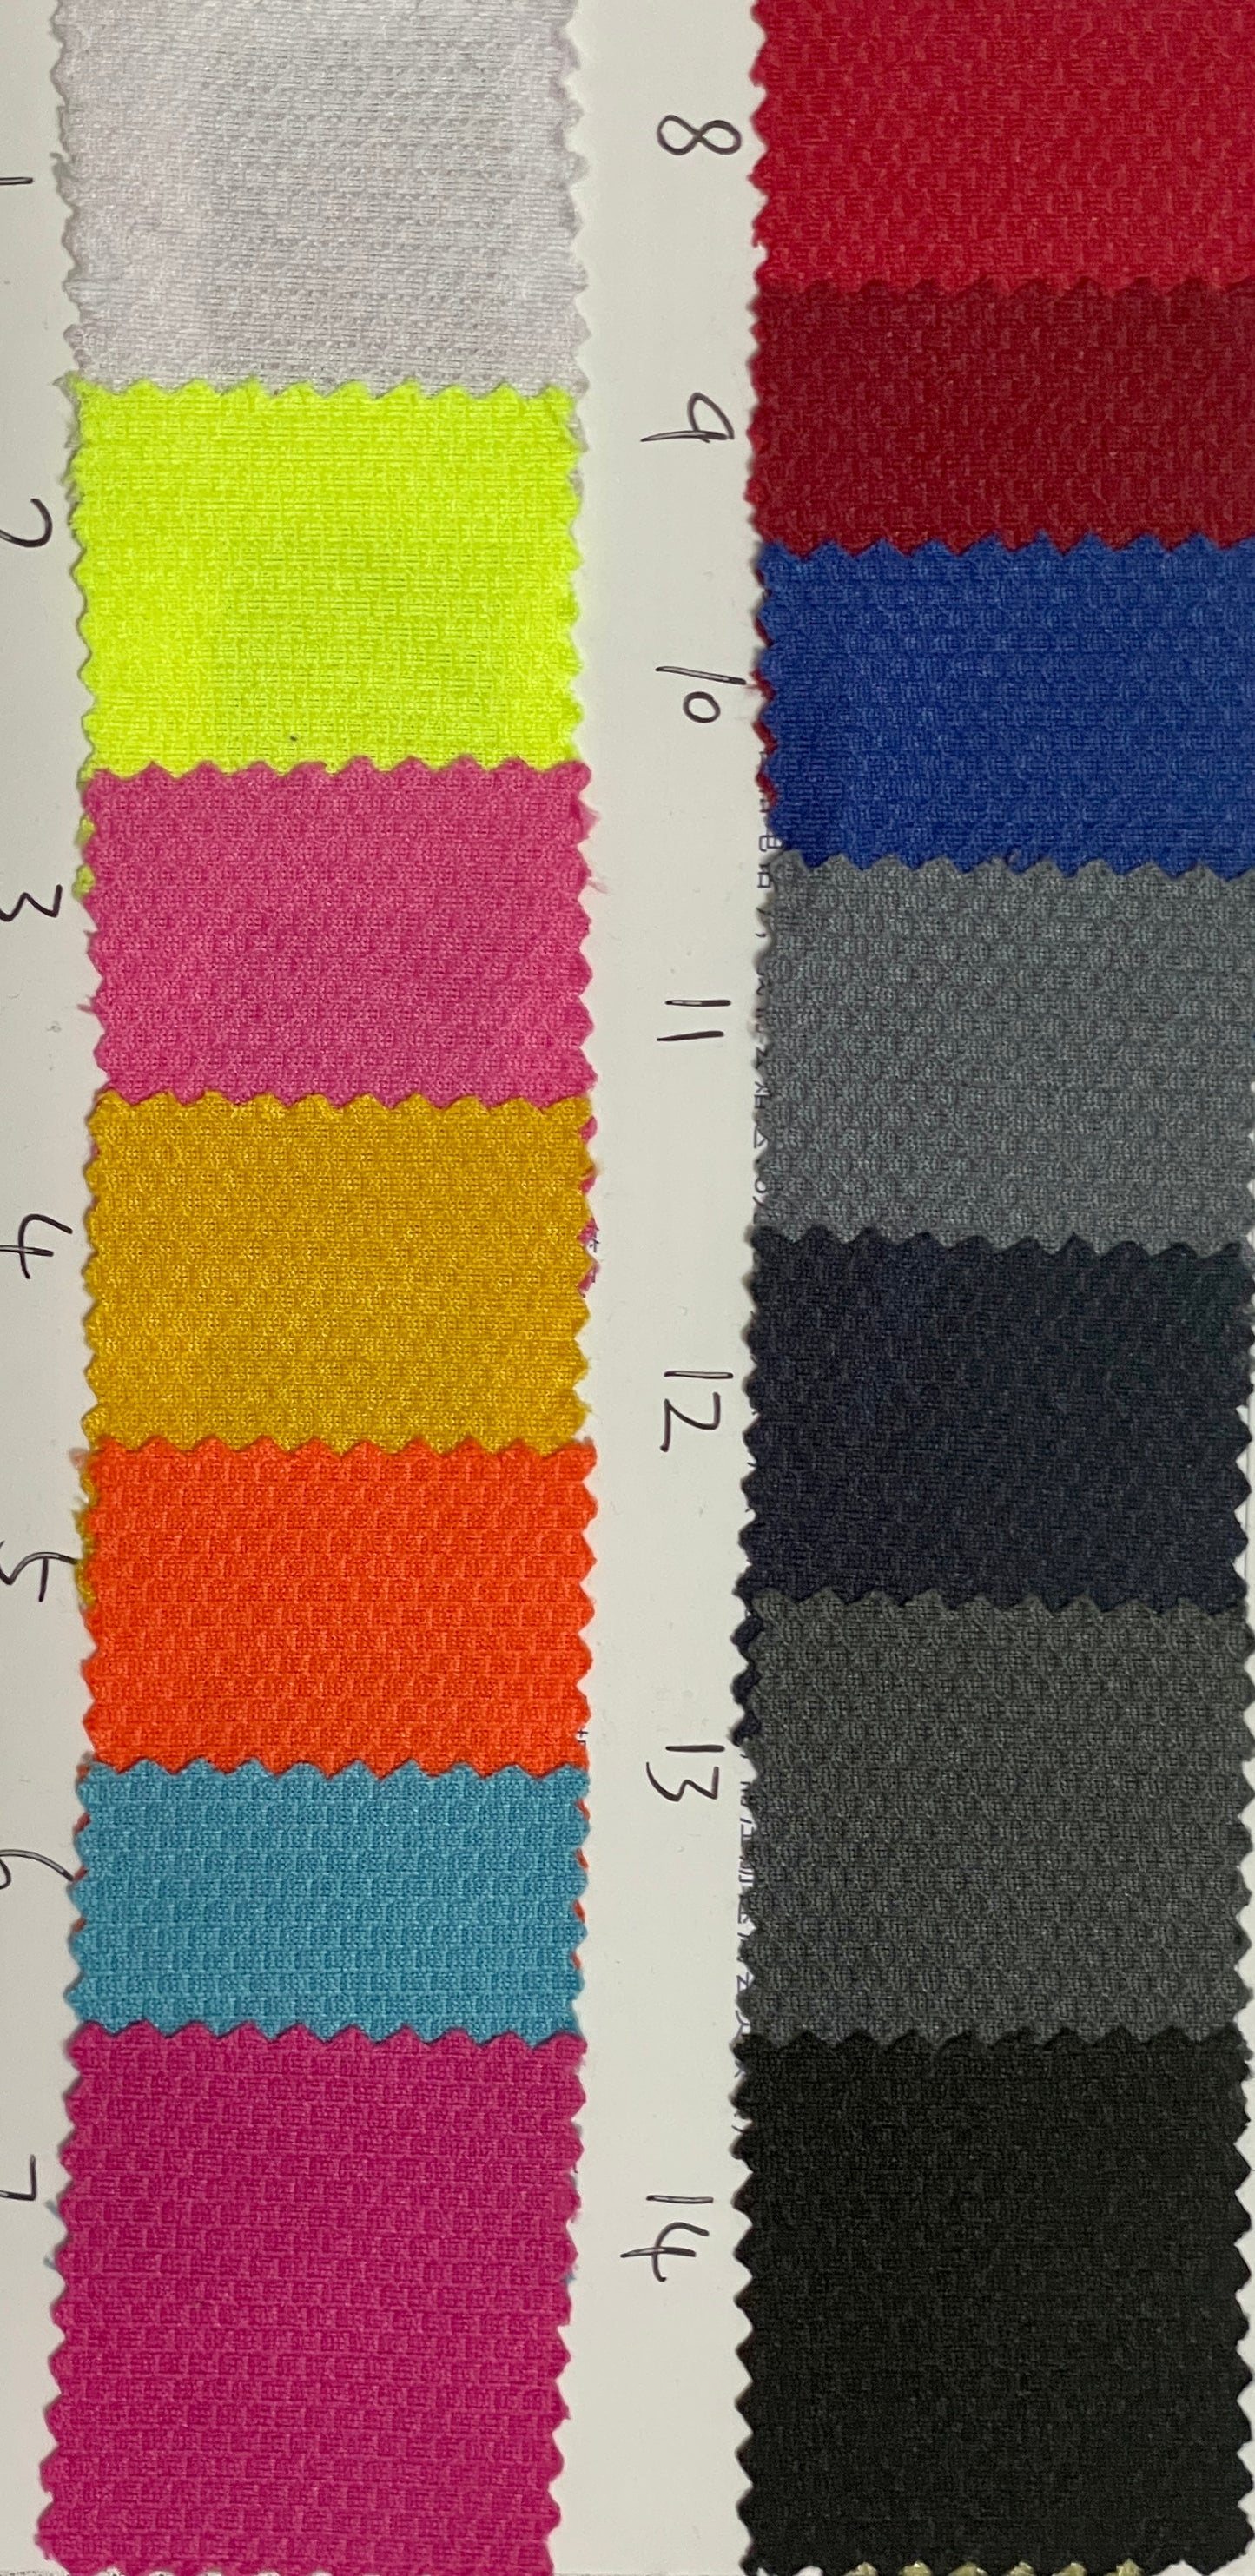 Quick Dry Football & Basketball Fabric --100% Polyester - Natasha Fabric